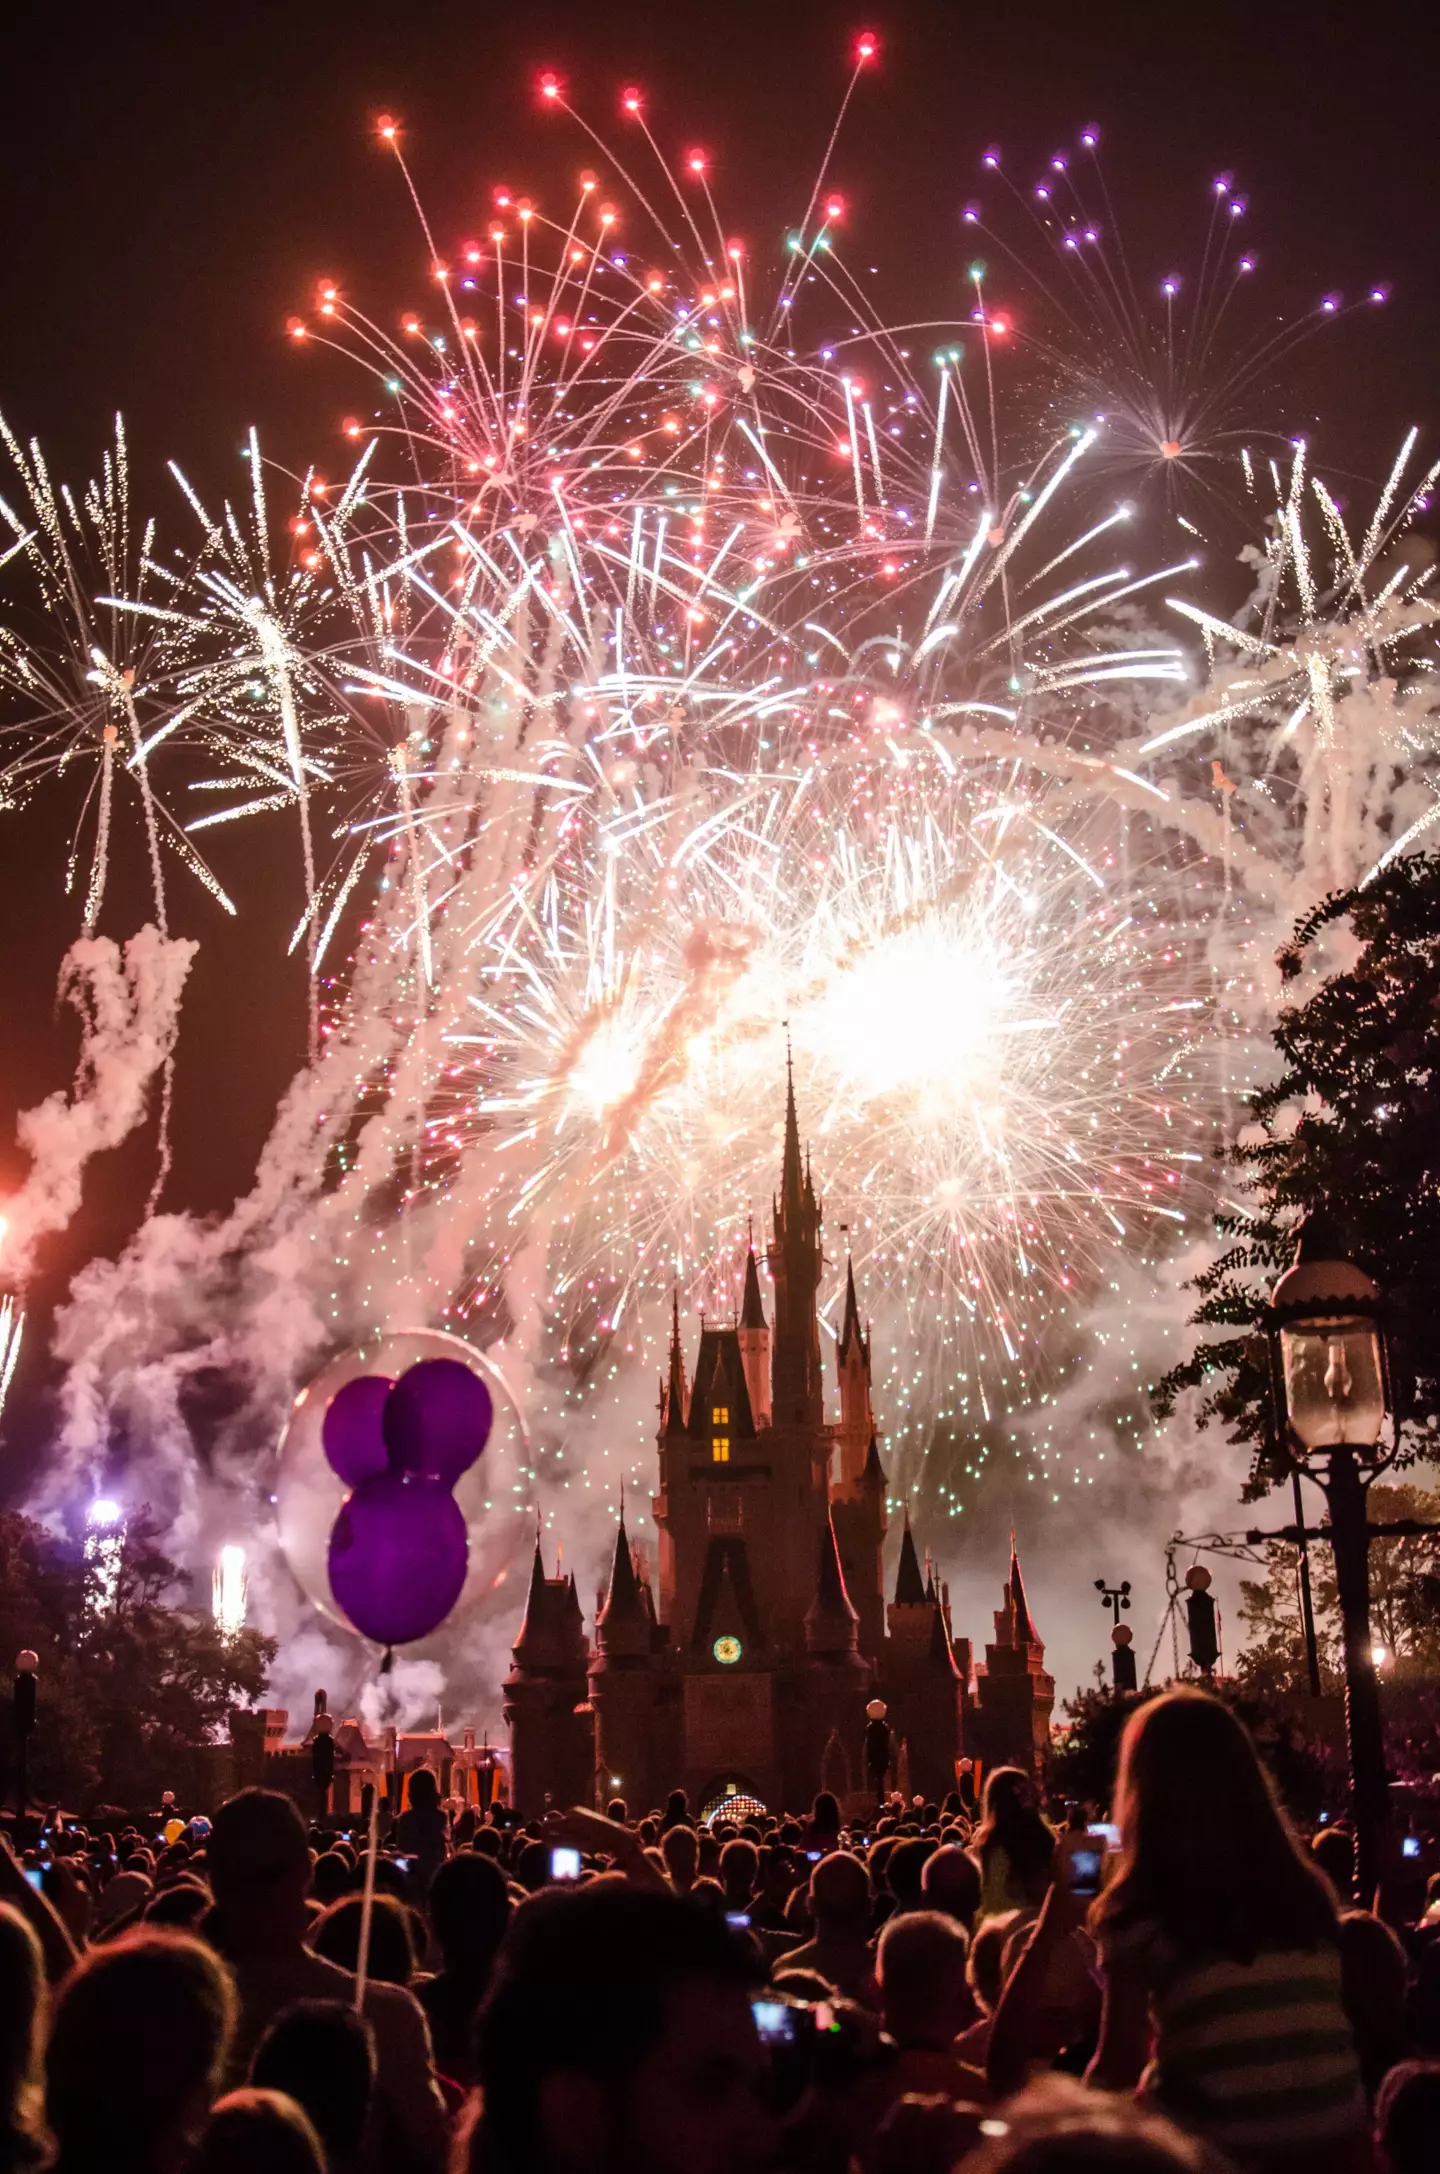 The fireworks over the Castle at Magic Kingdom in Walt Disney World, Orlando, Florida.